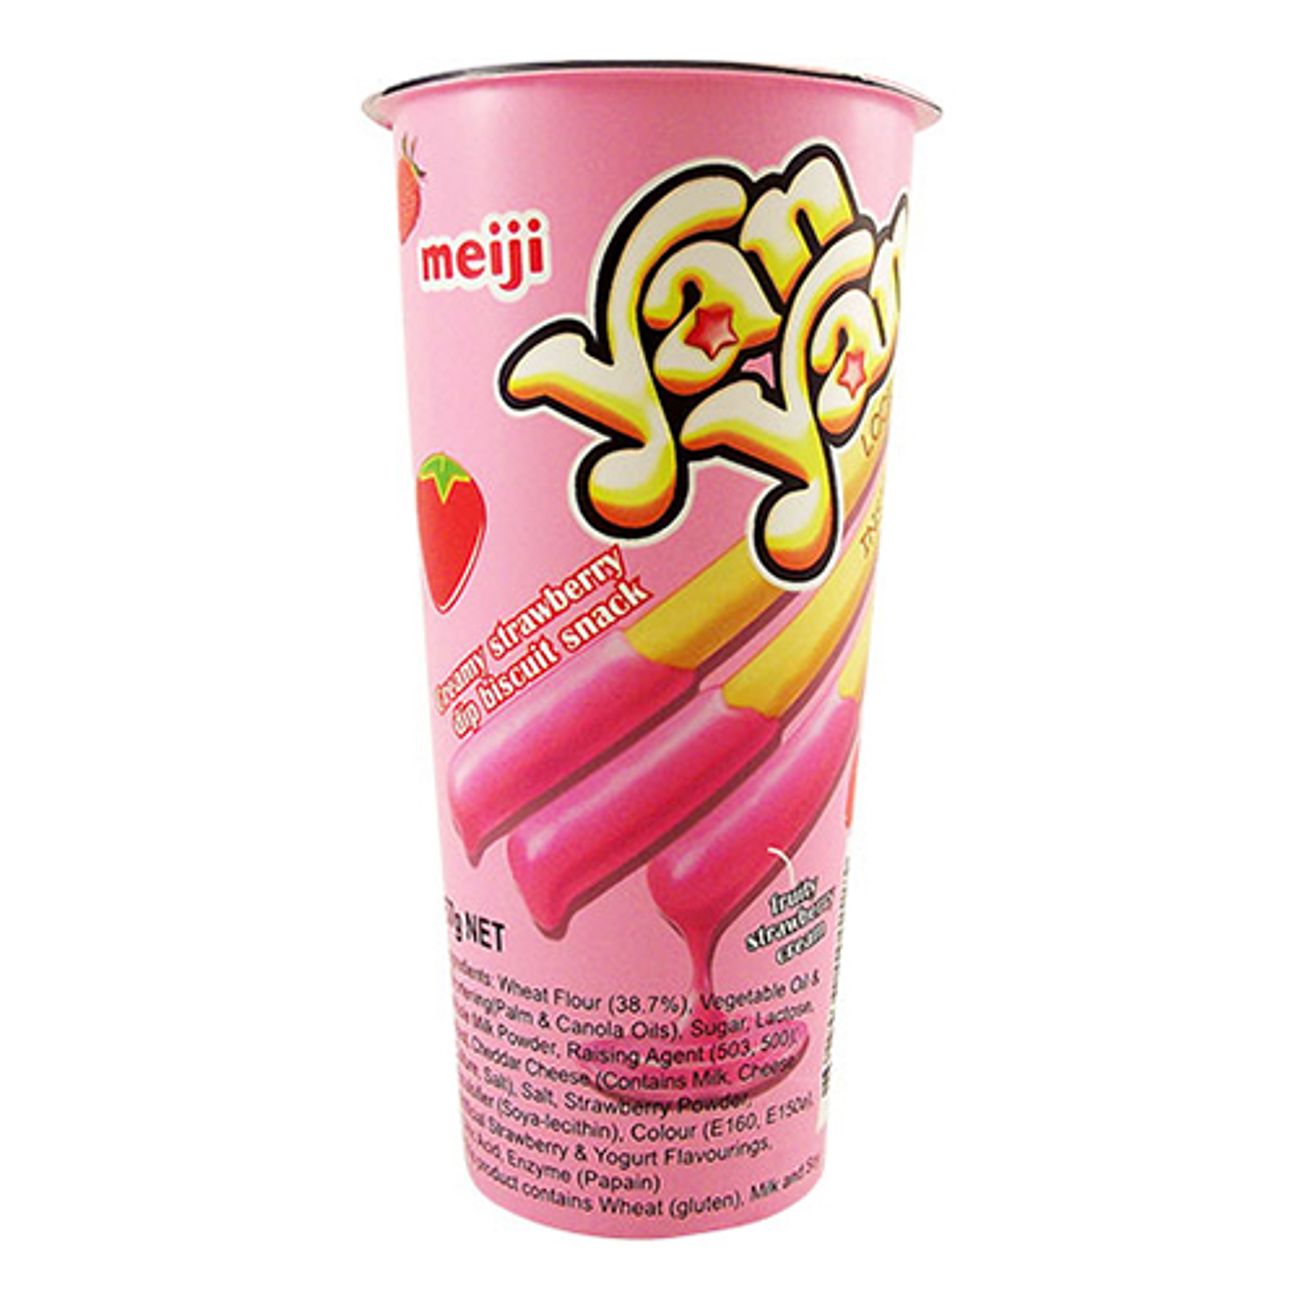 meiji-yan-yan-creamy-strawberry-dip-biscuit-snack-1